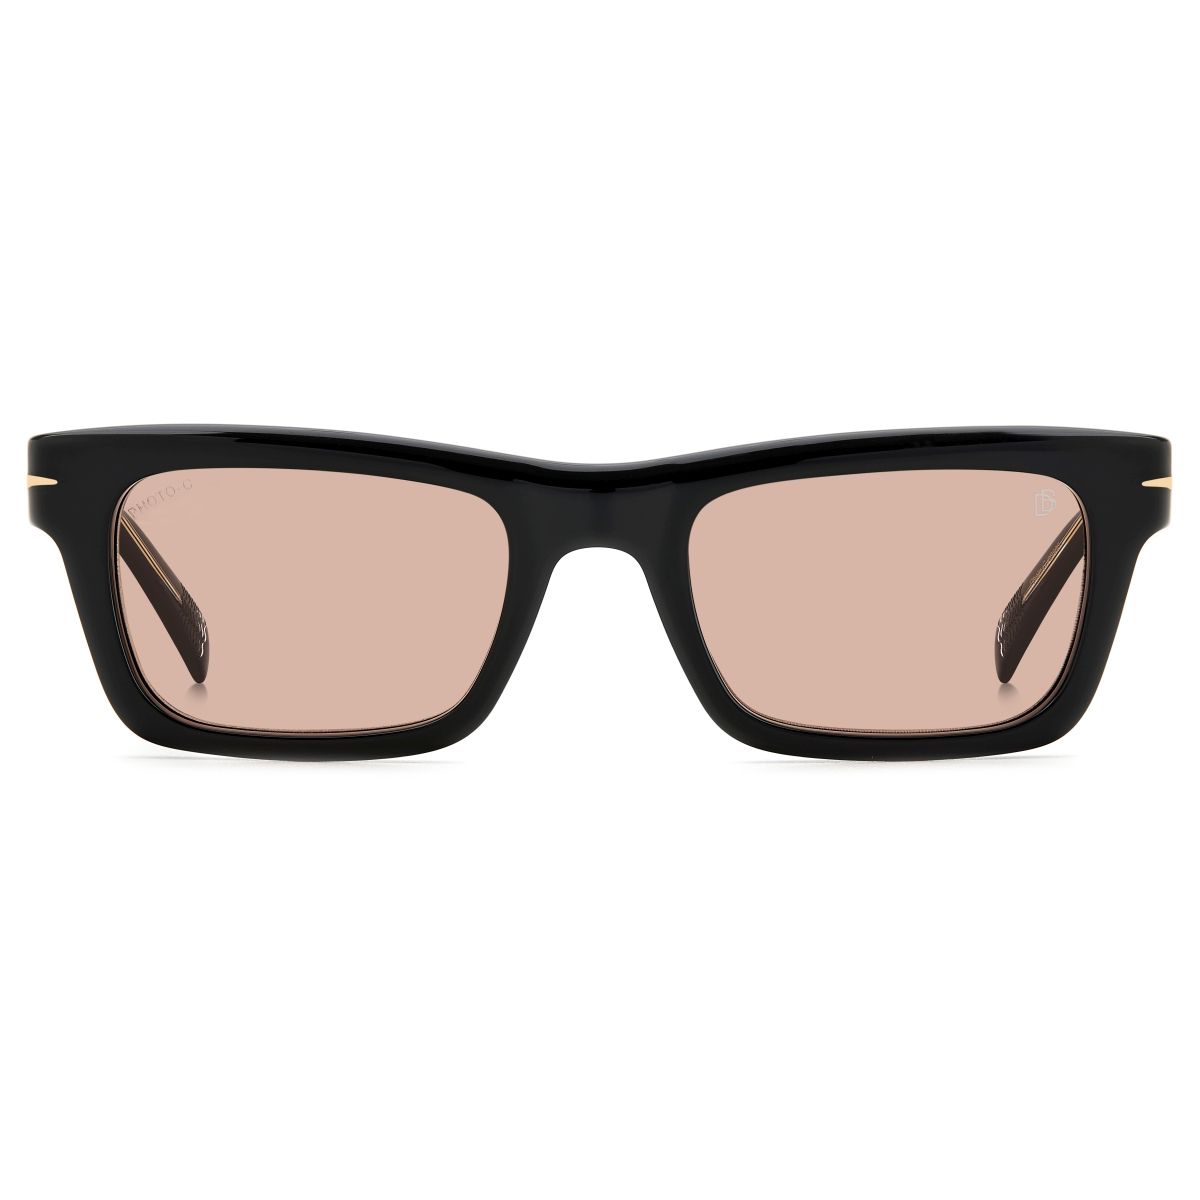 Buy Sunglasses DAVID BECKHAM DB 7030/S 807 BLACK 49-24-145 ACETATE / MEN at  Amazon.in